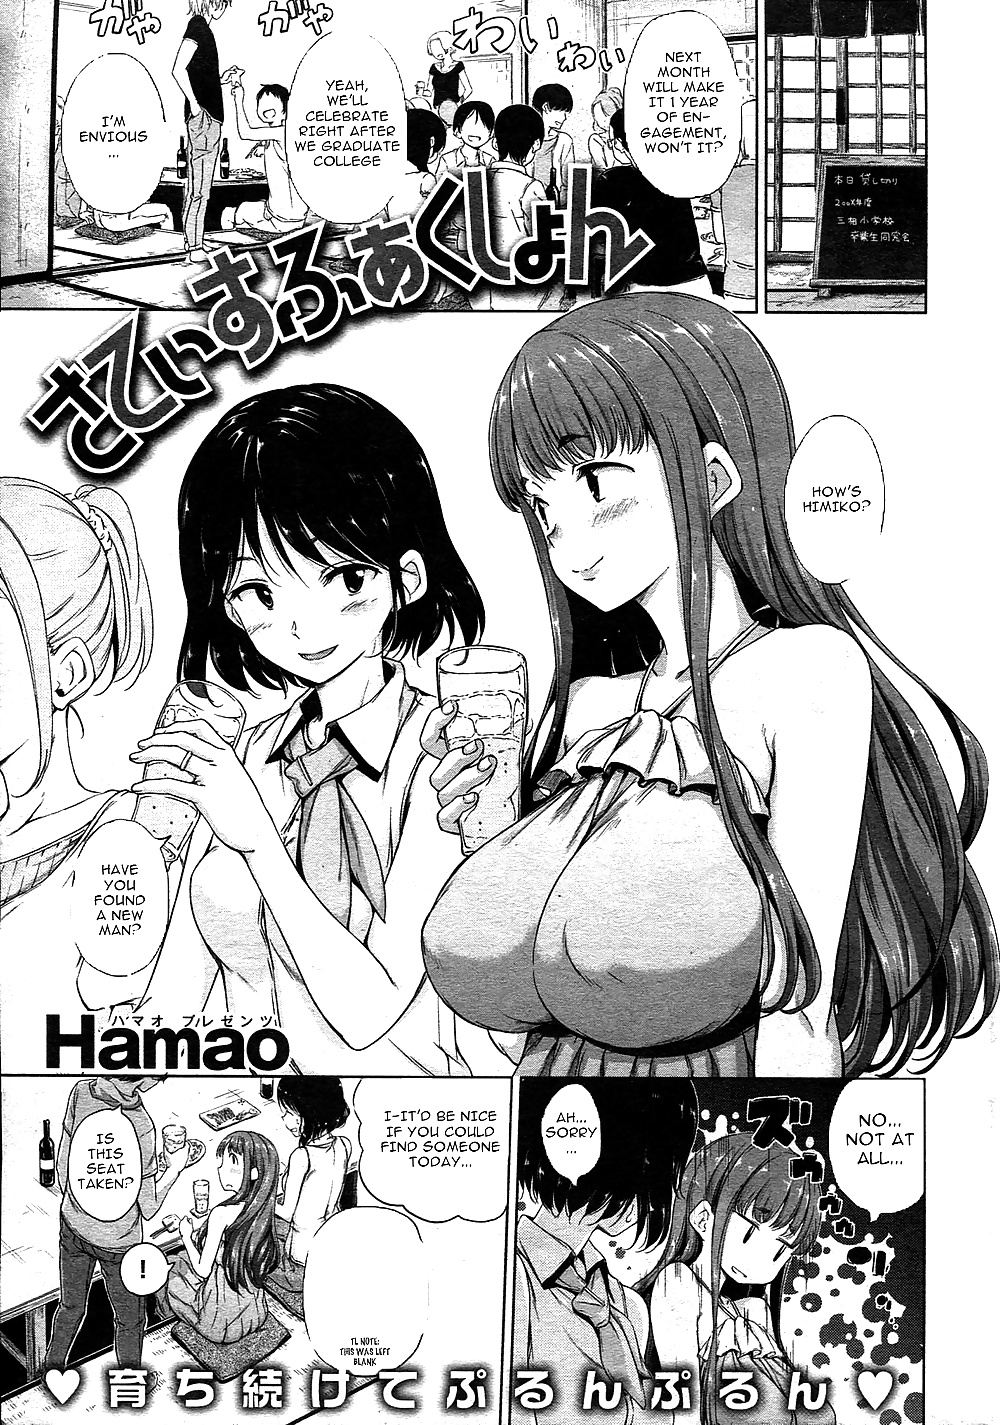 Hamao Compilation #28562355